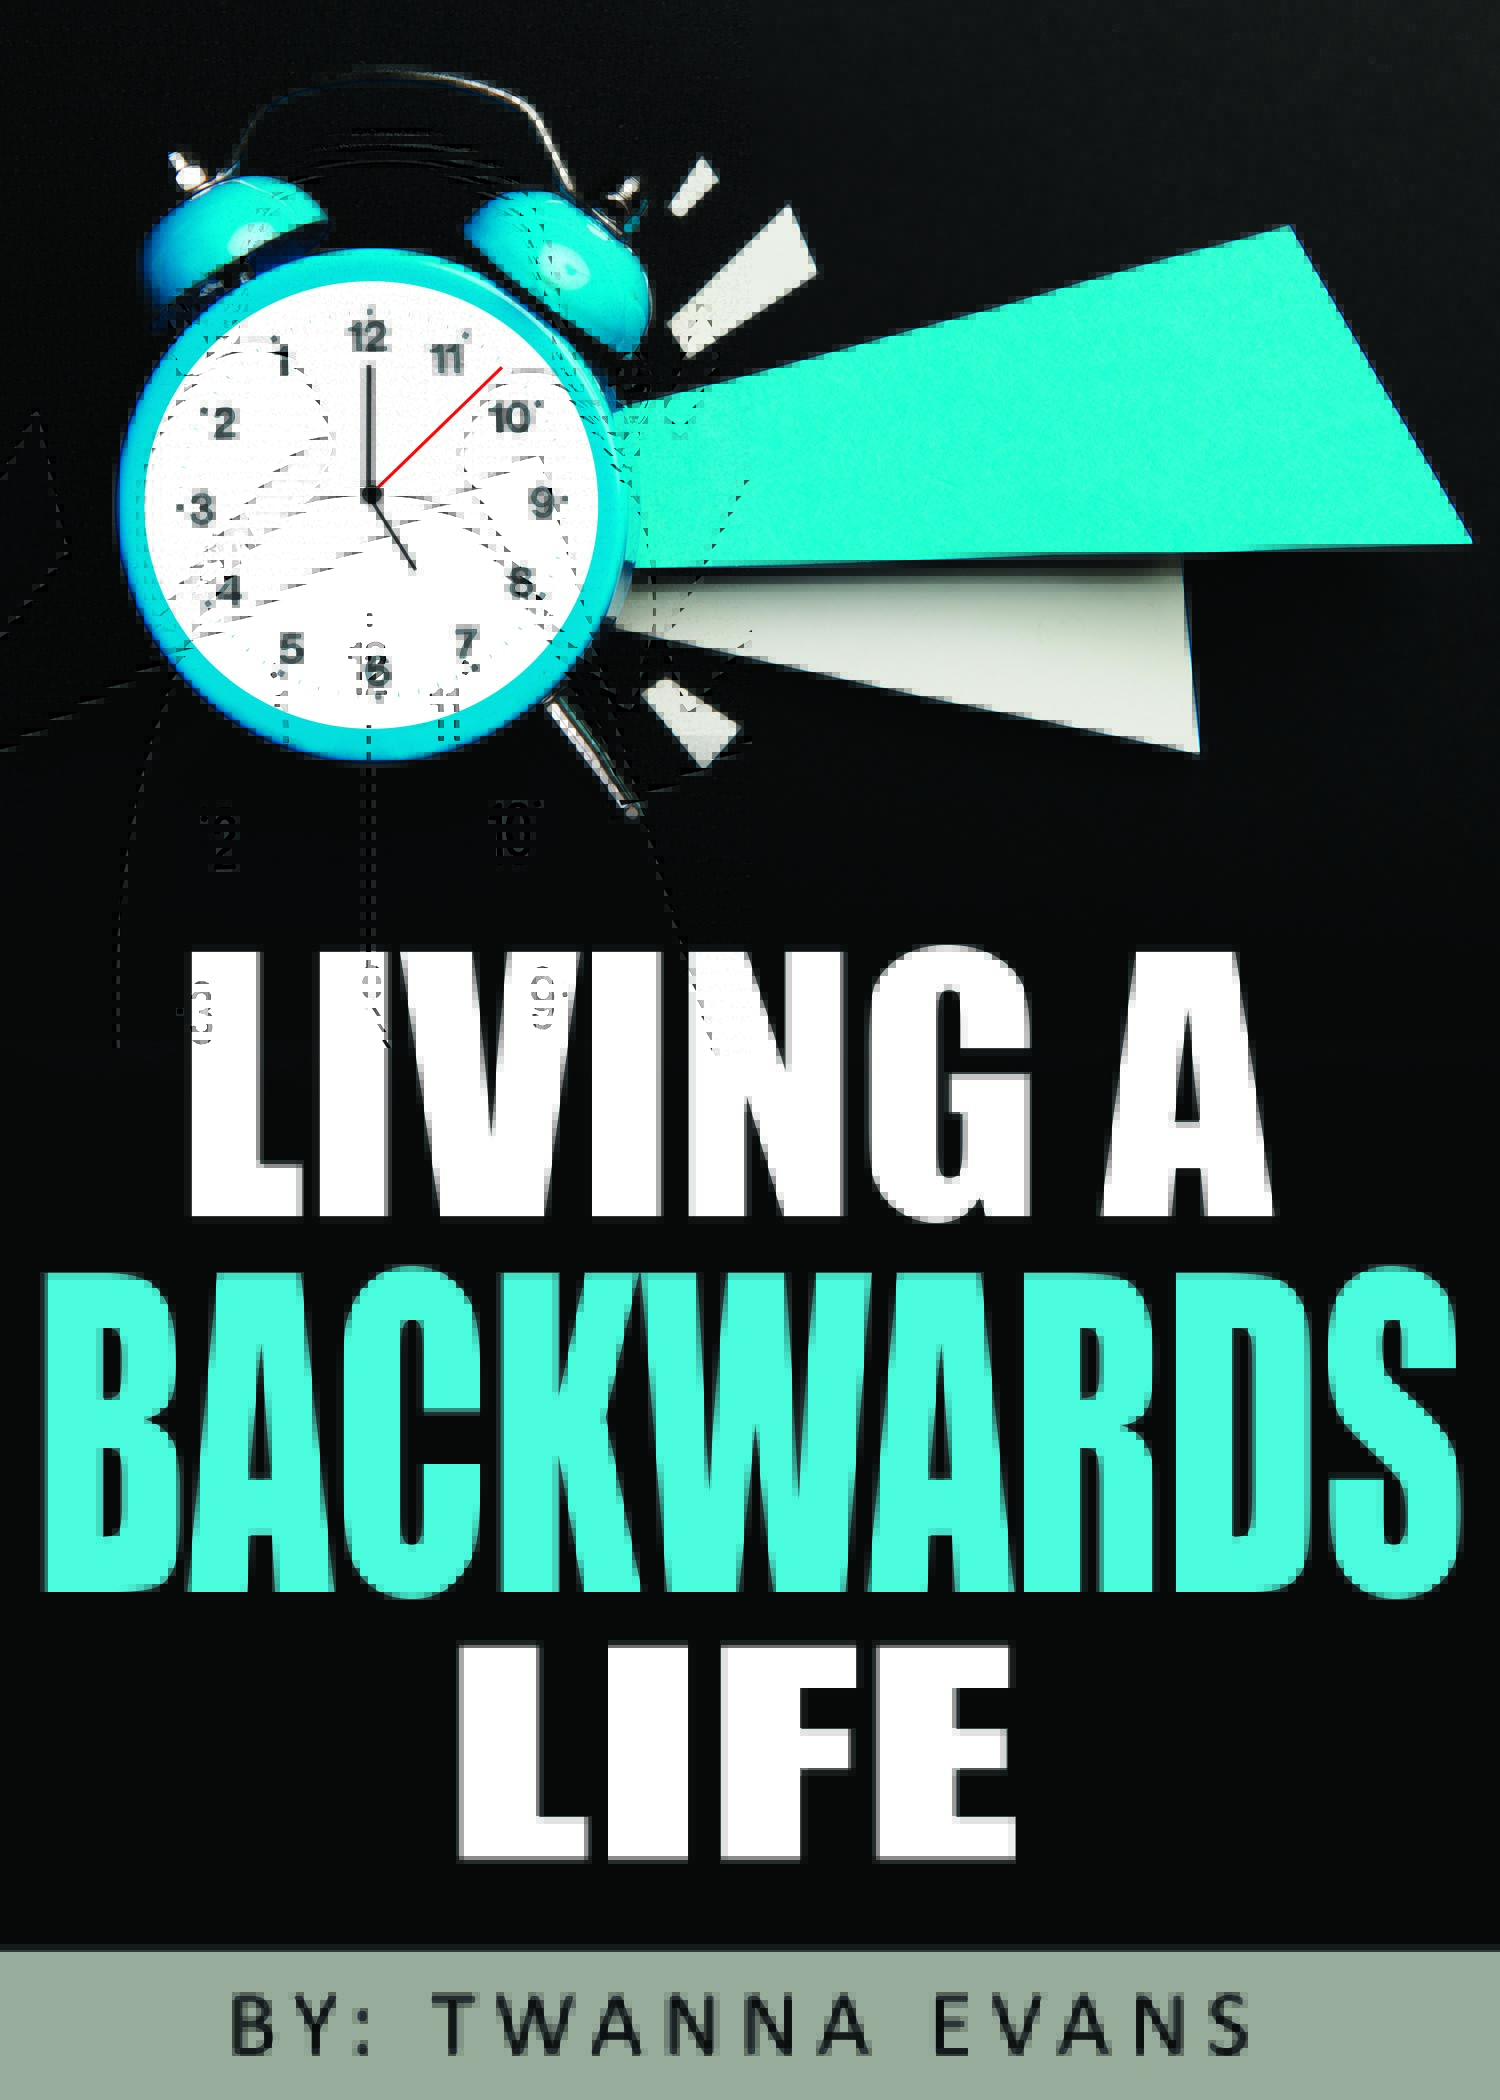 Living a Backwards Life by Twanna Evans